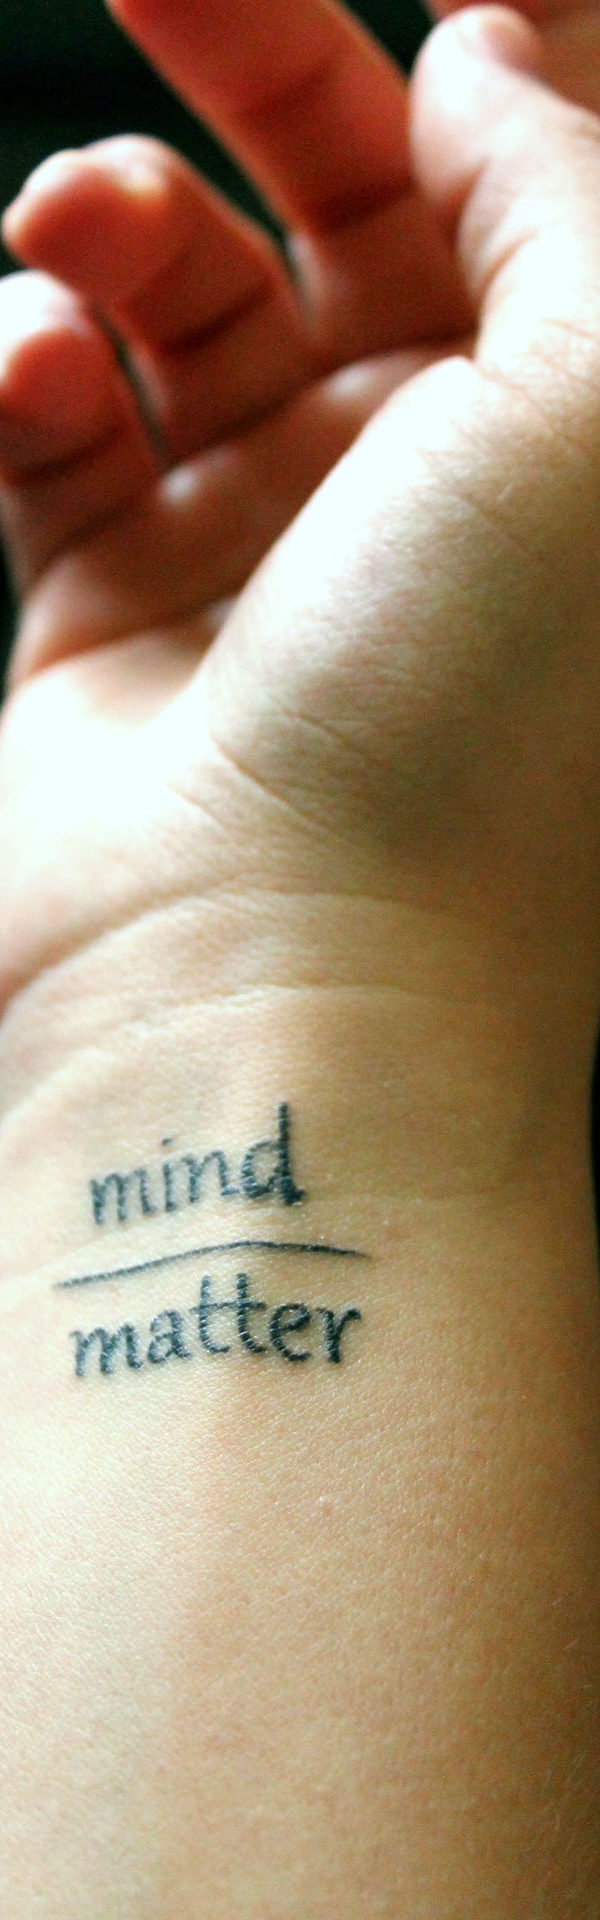 Mind Over Matter Tattoo Ideas